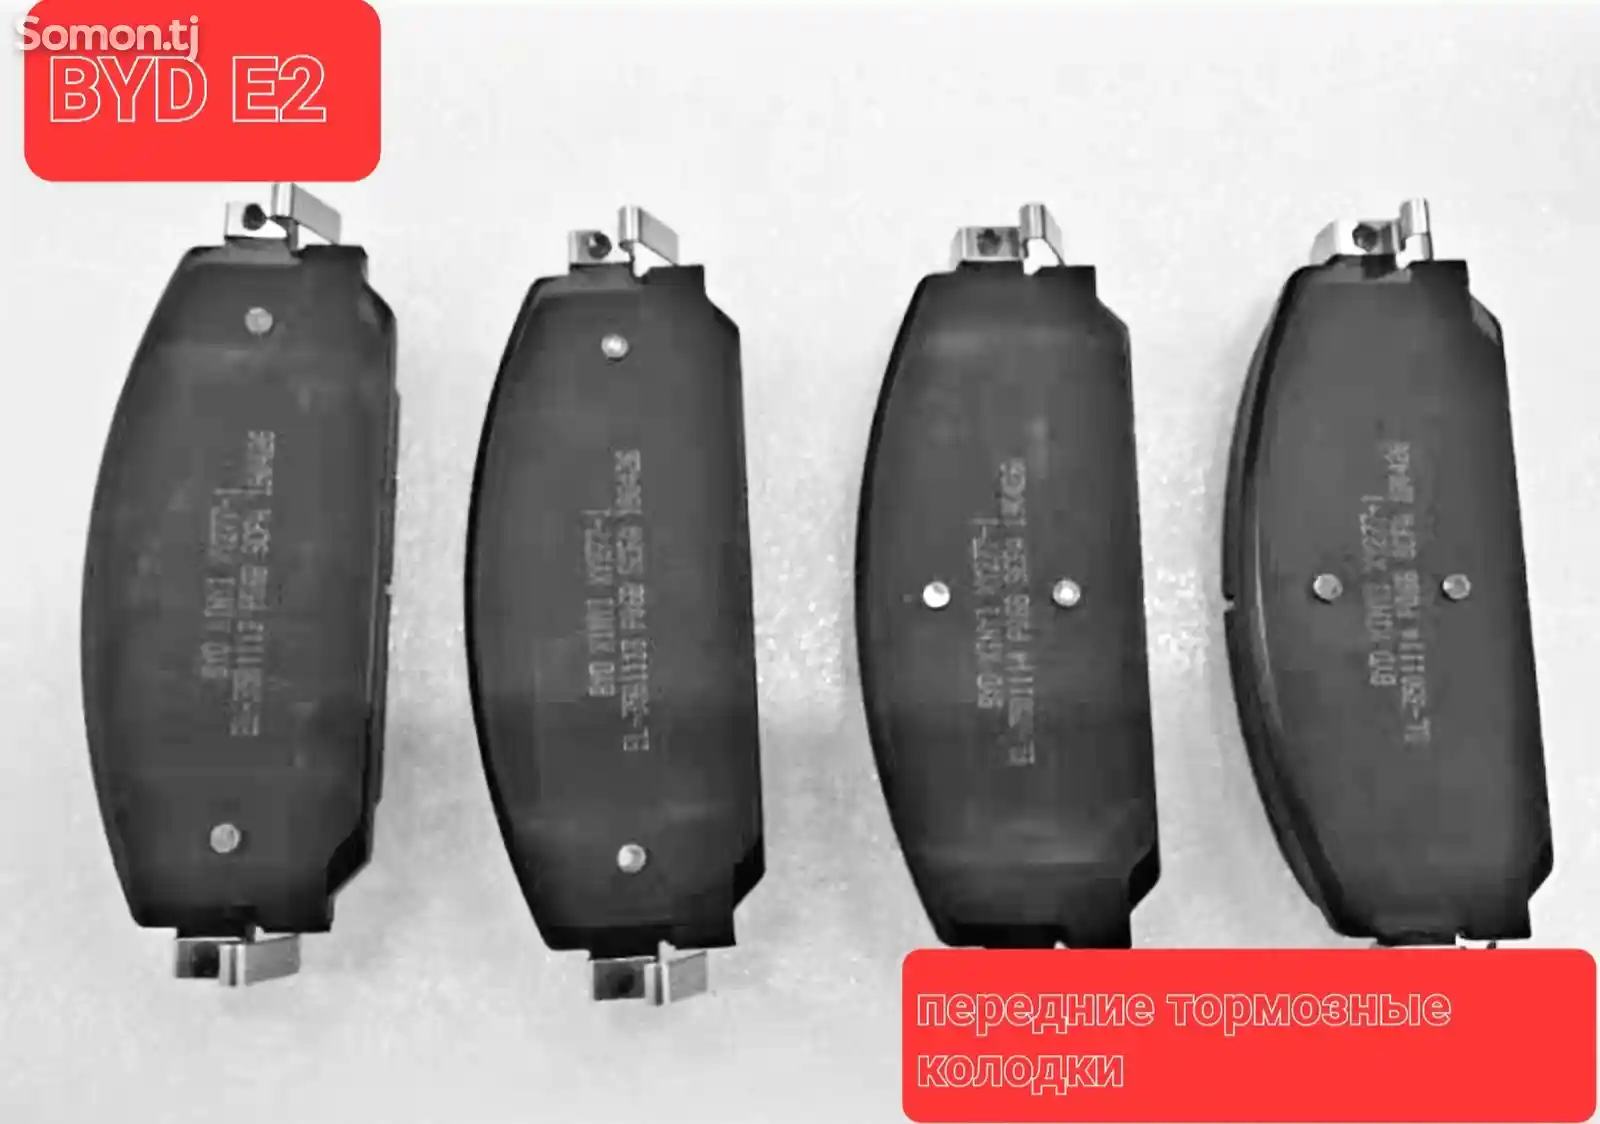 Тормозные колодки от BYD E2-3